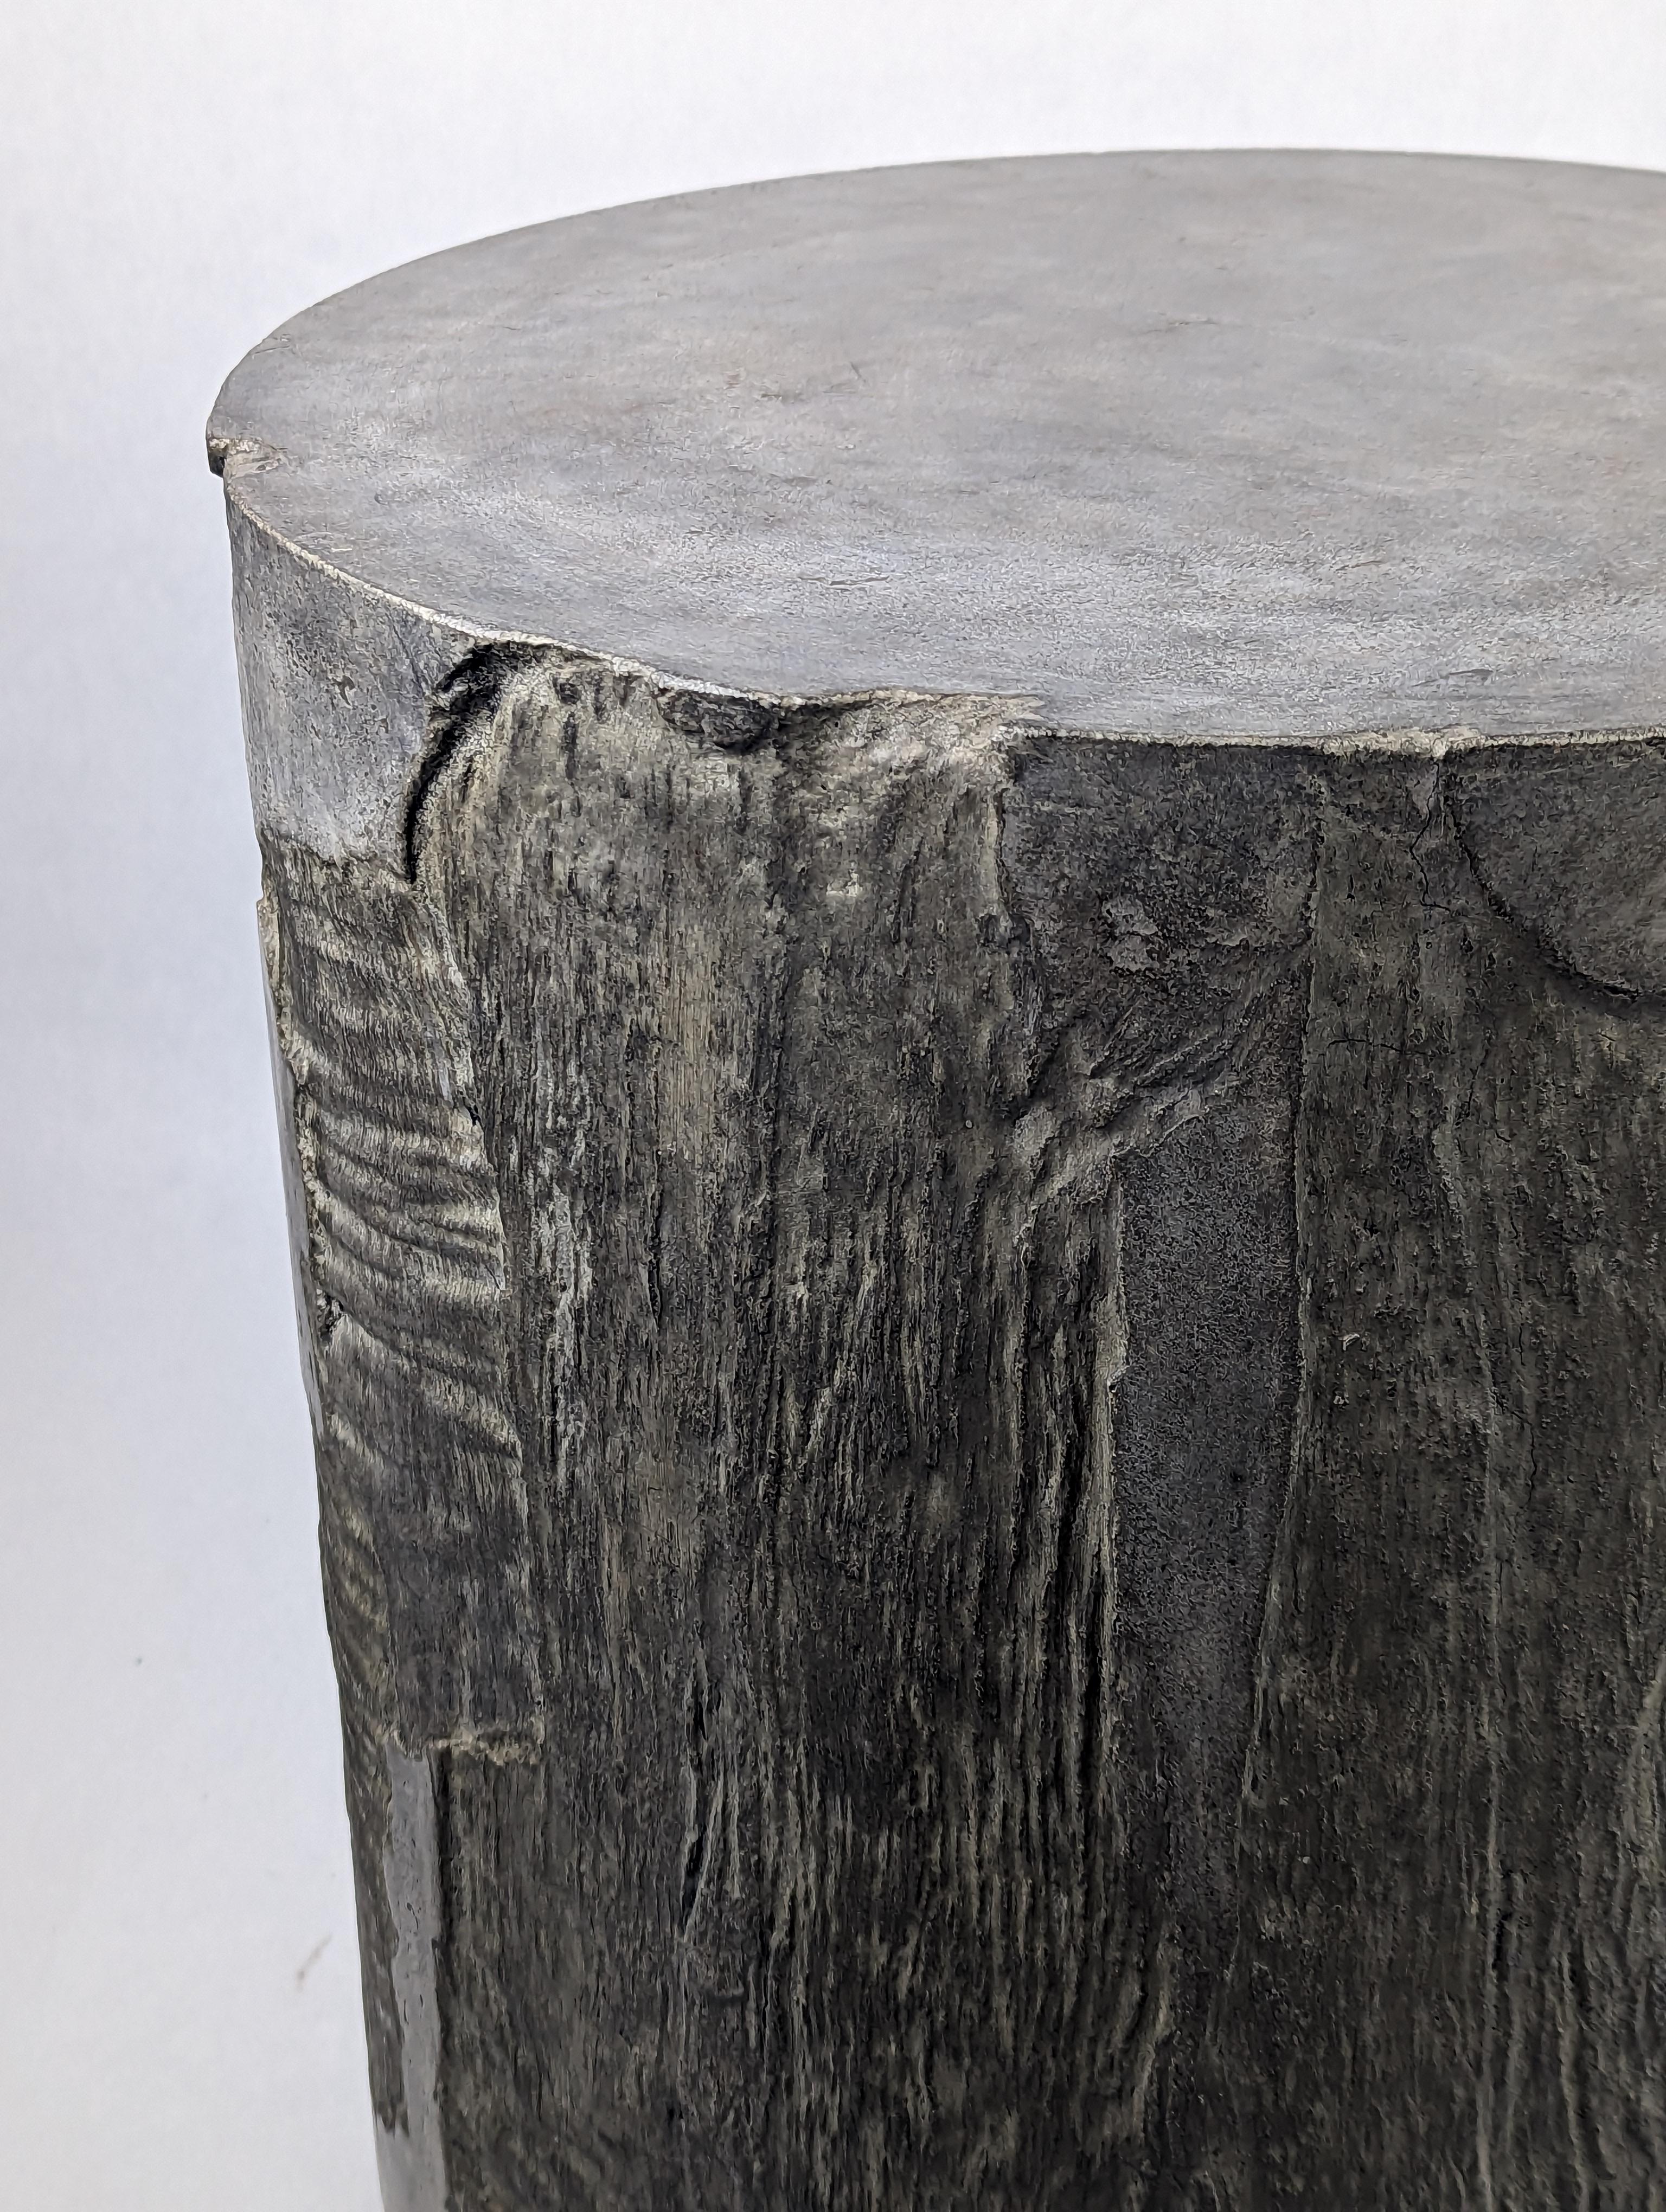 American Dark Grey Concrete Stool with Stone or Cliff-like Texture, 'Vertigo'